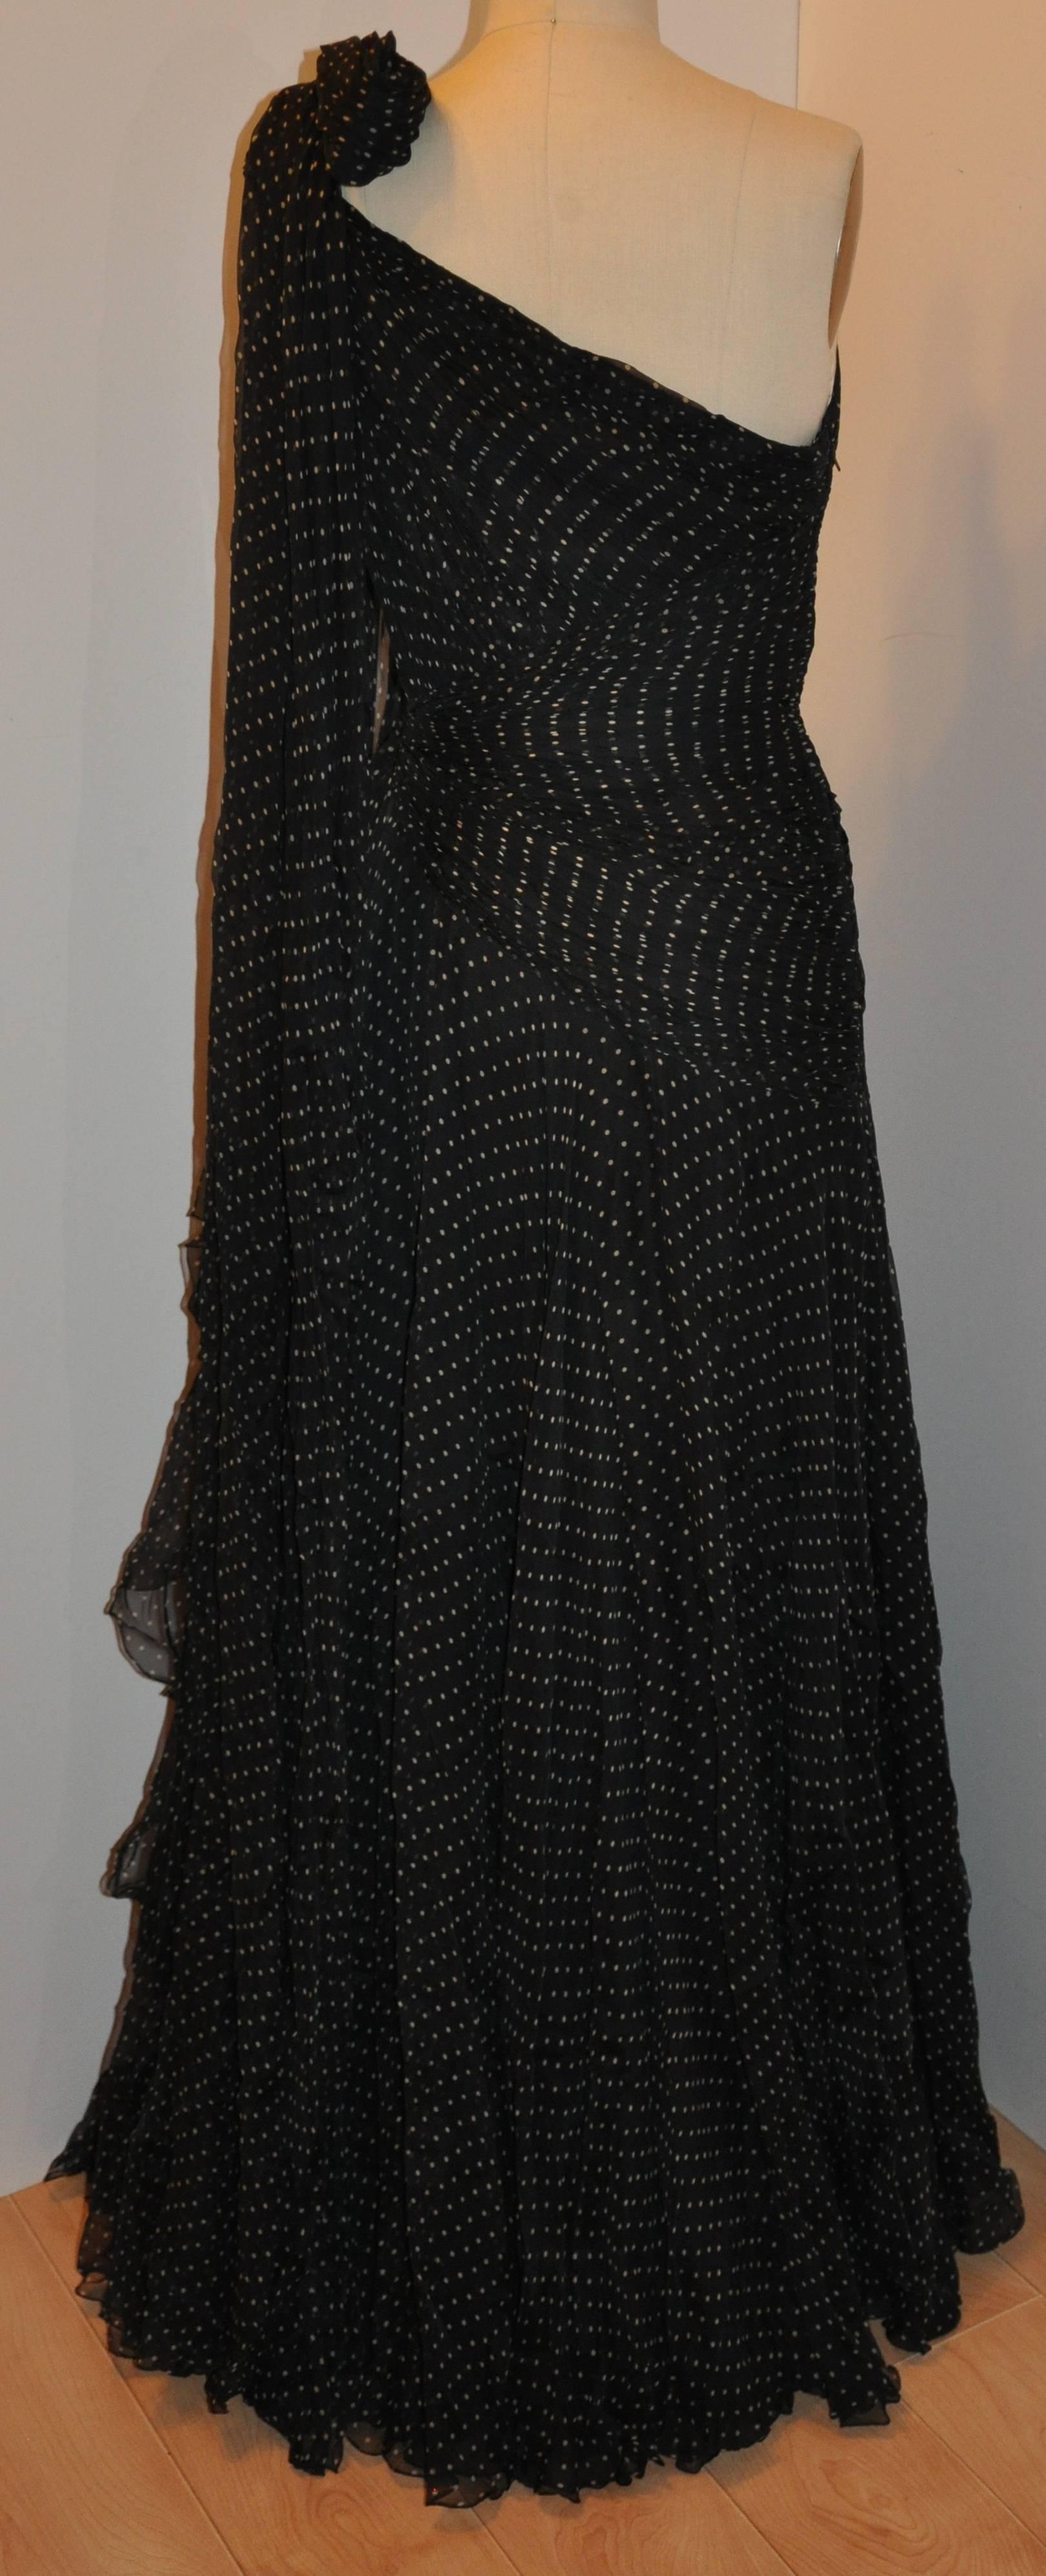 Georgio Armani Multi-Layered Black Polka Dot Silk Chiffon & Train Cocktail Gown In Good Condition For Sale In New York, NY